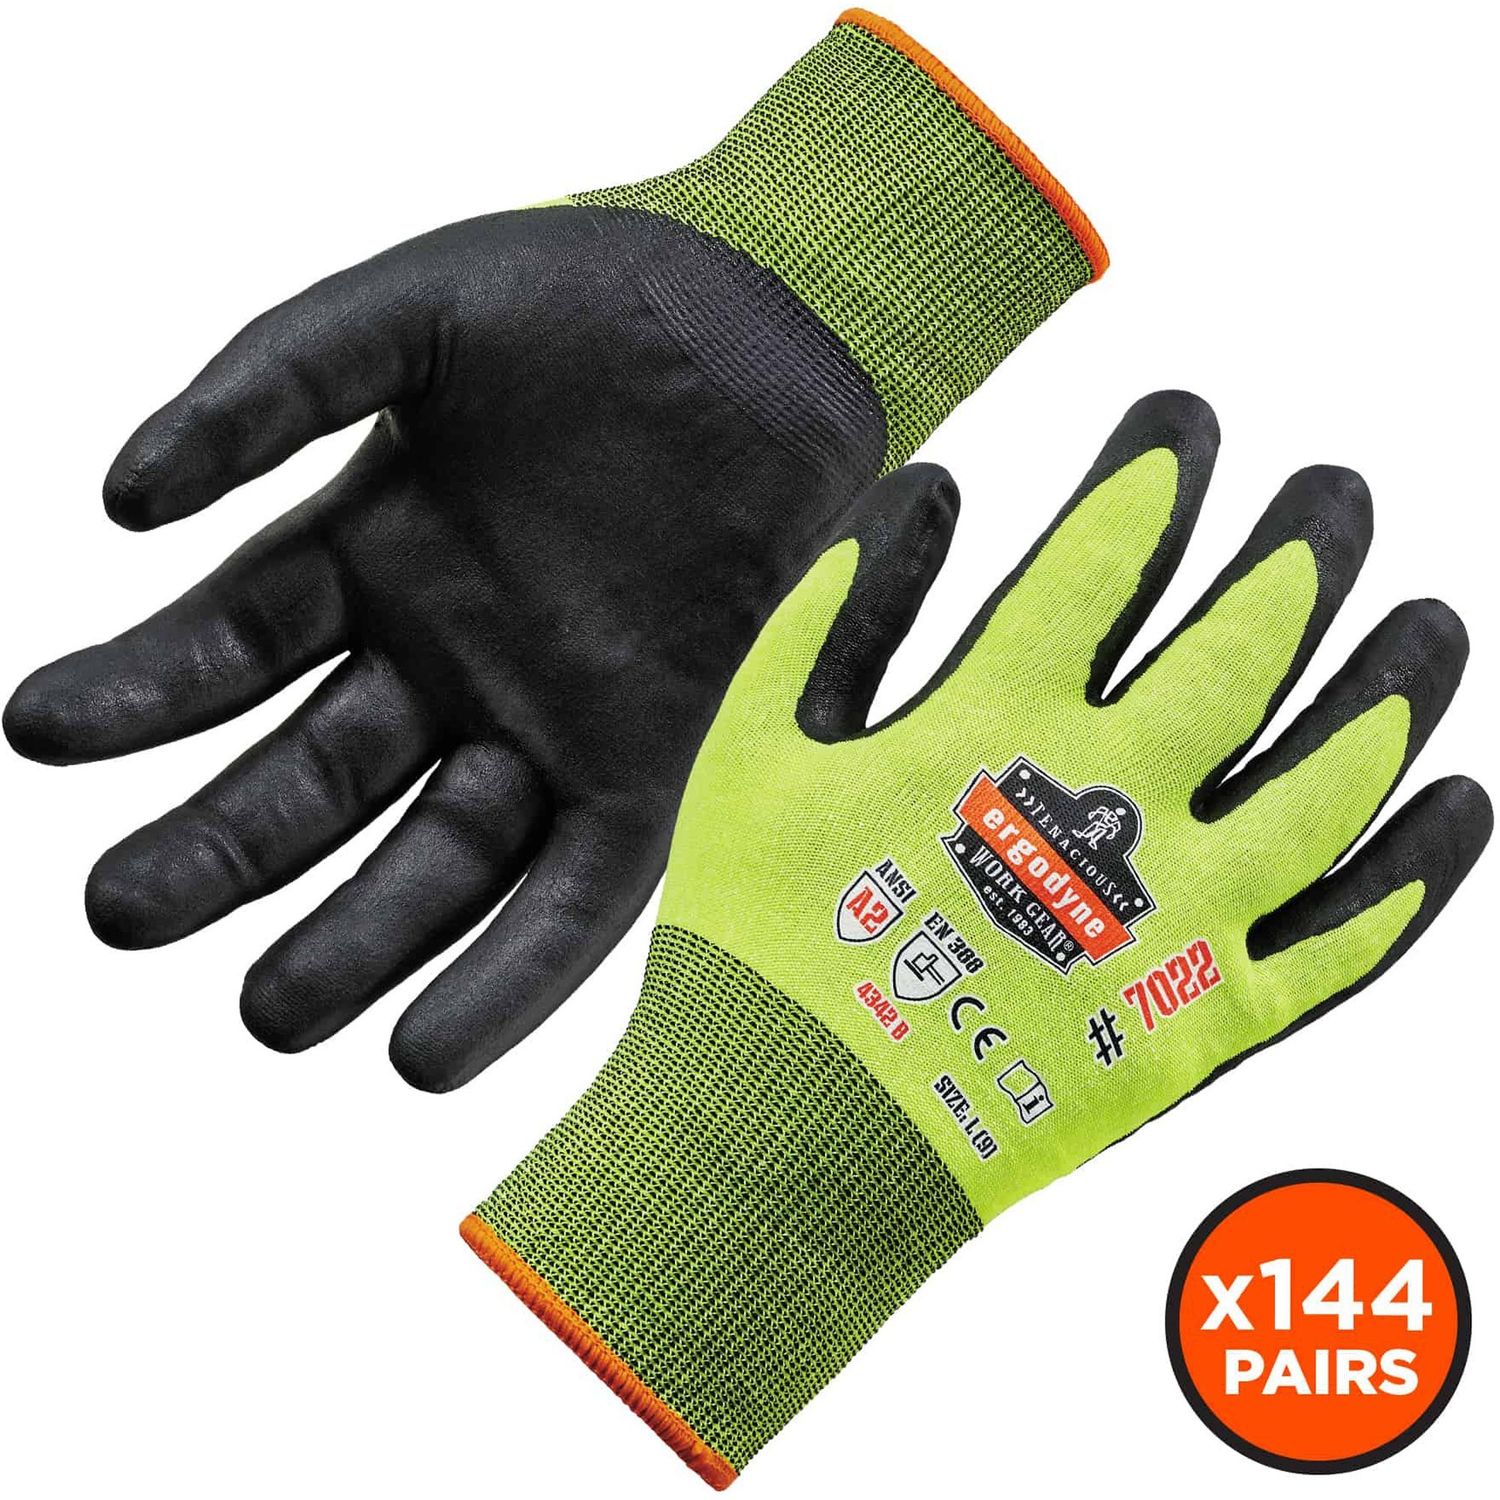 7022-CASE Nitrile-Coated Cut-Resistant Gloves Nitrile Coating, Large Size, Lime